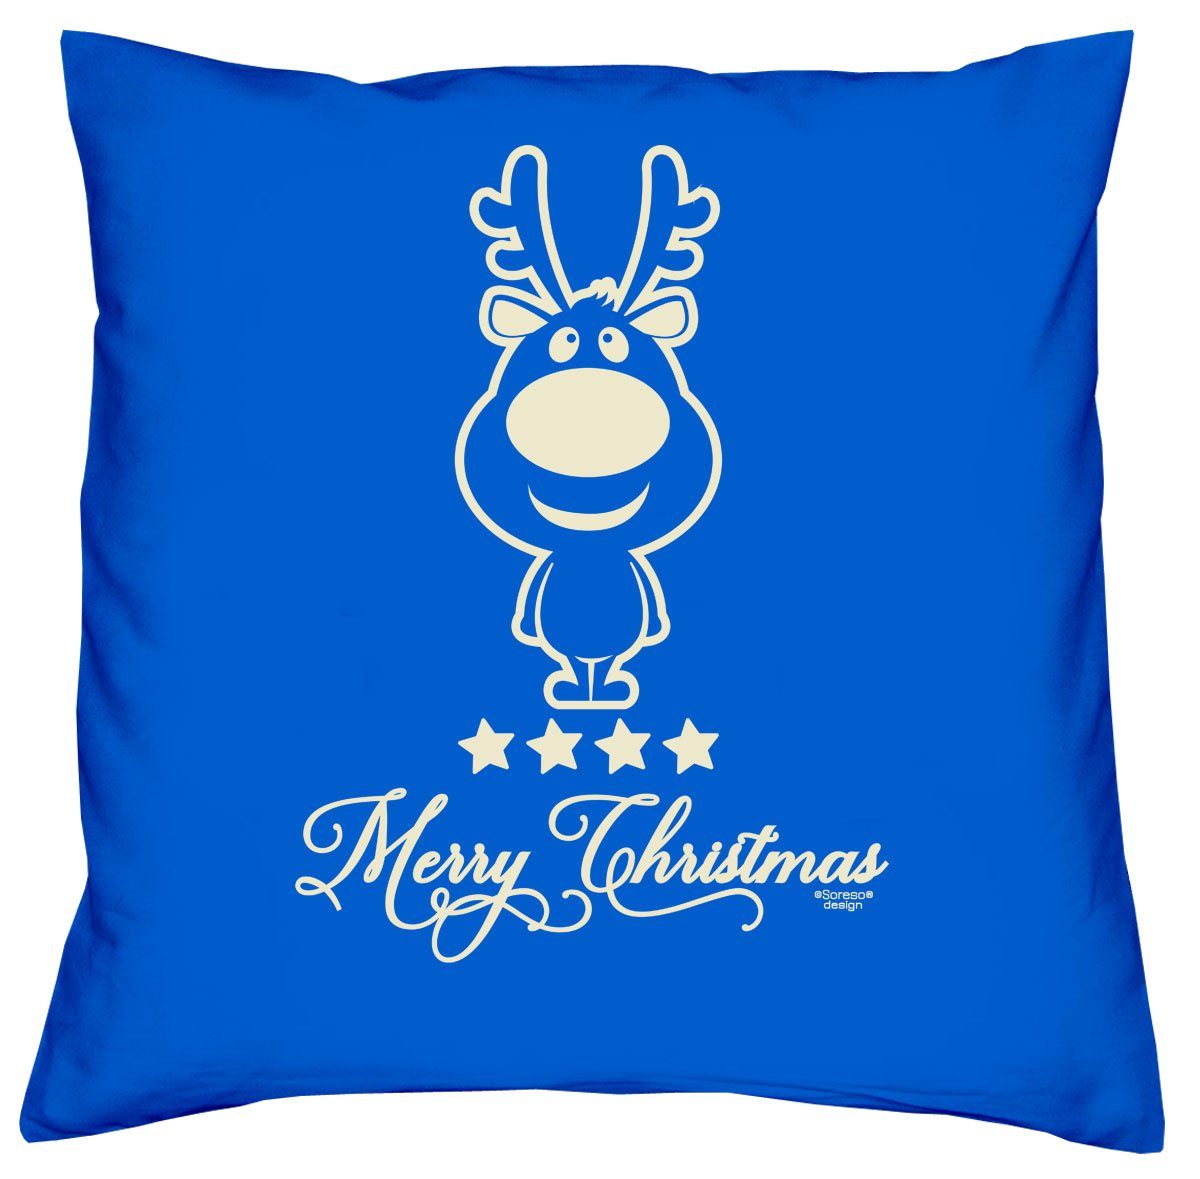 Soreso® Dekokissen Kissen Christmas Kissenbezug und Füllung, Mitbringsel royal-blau